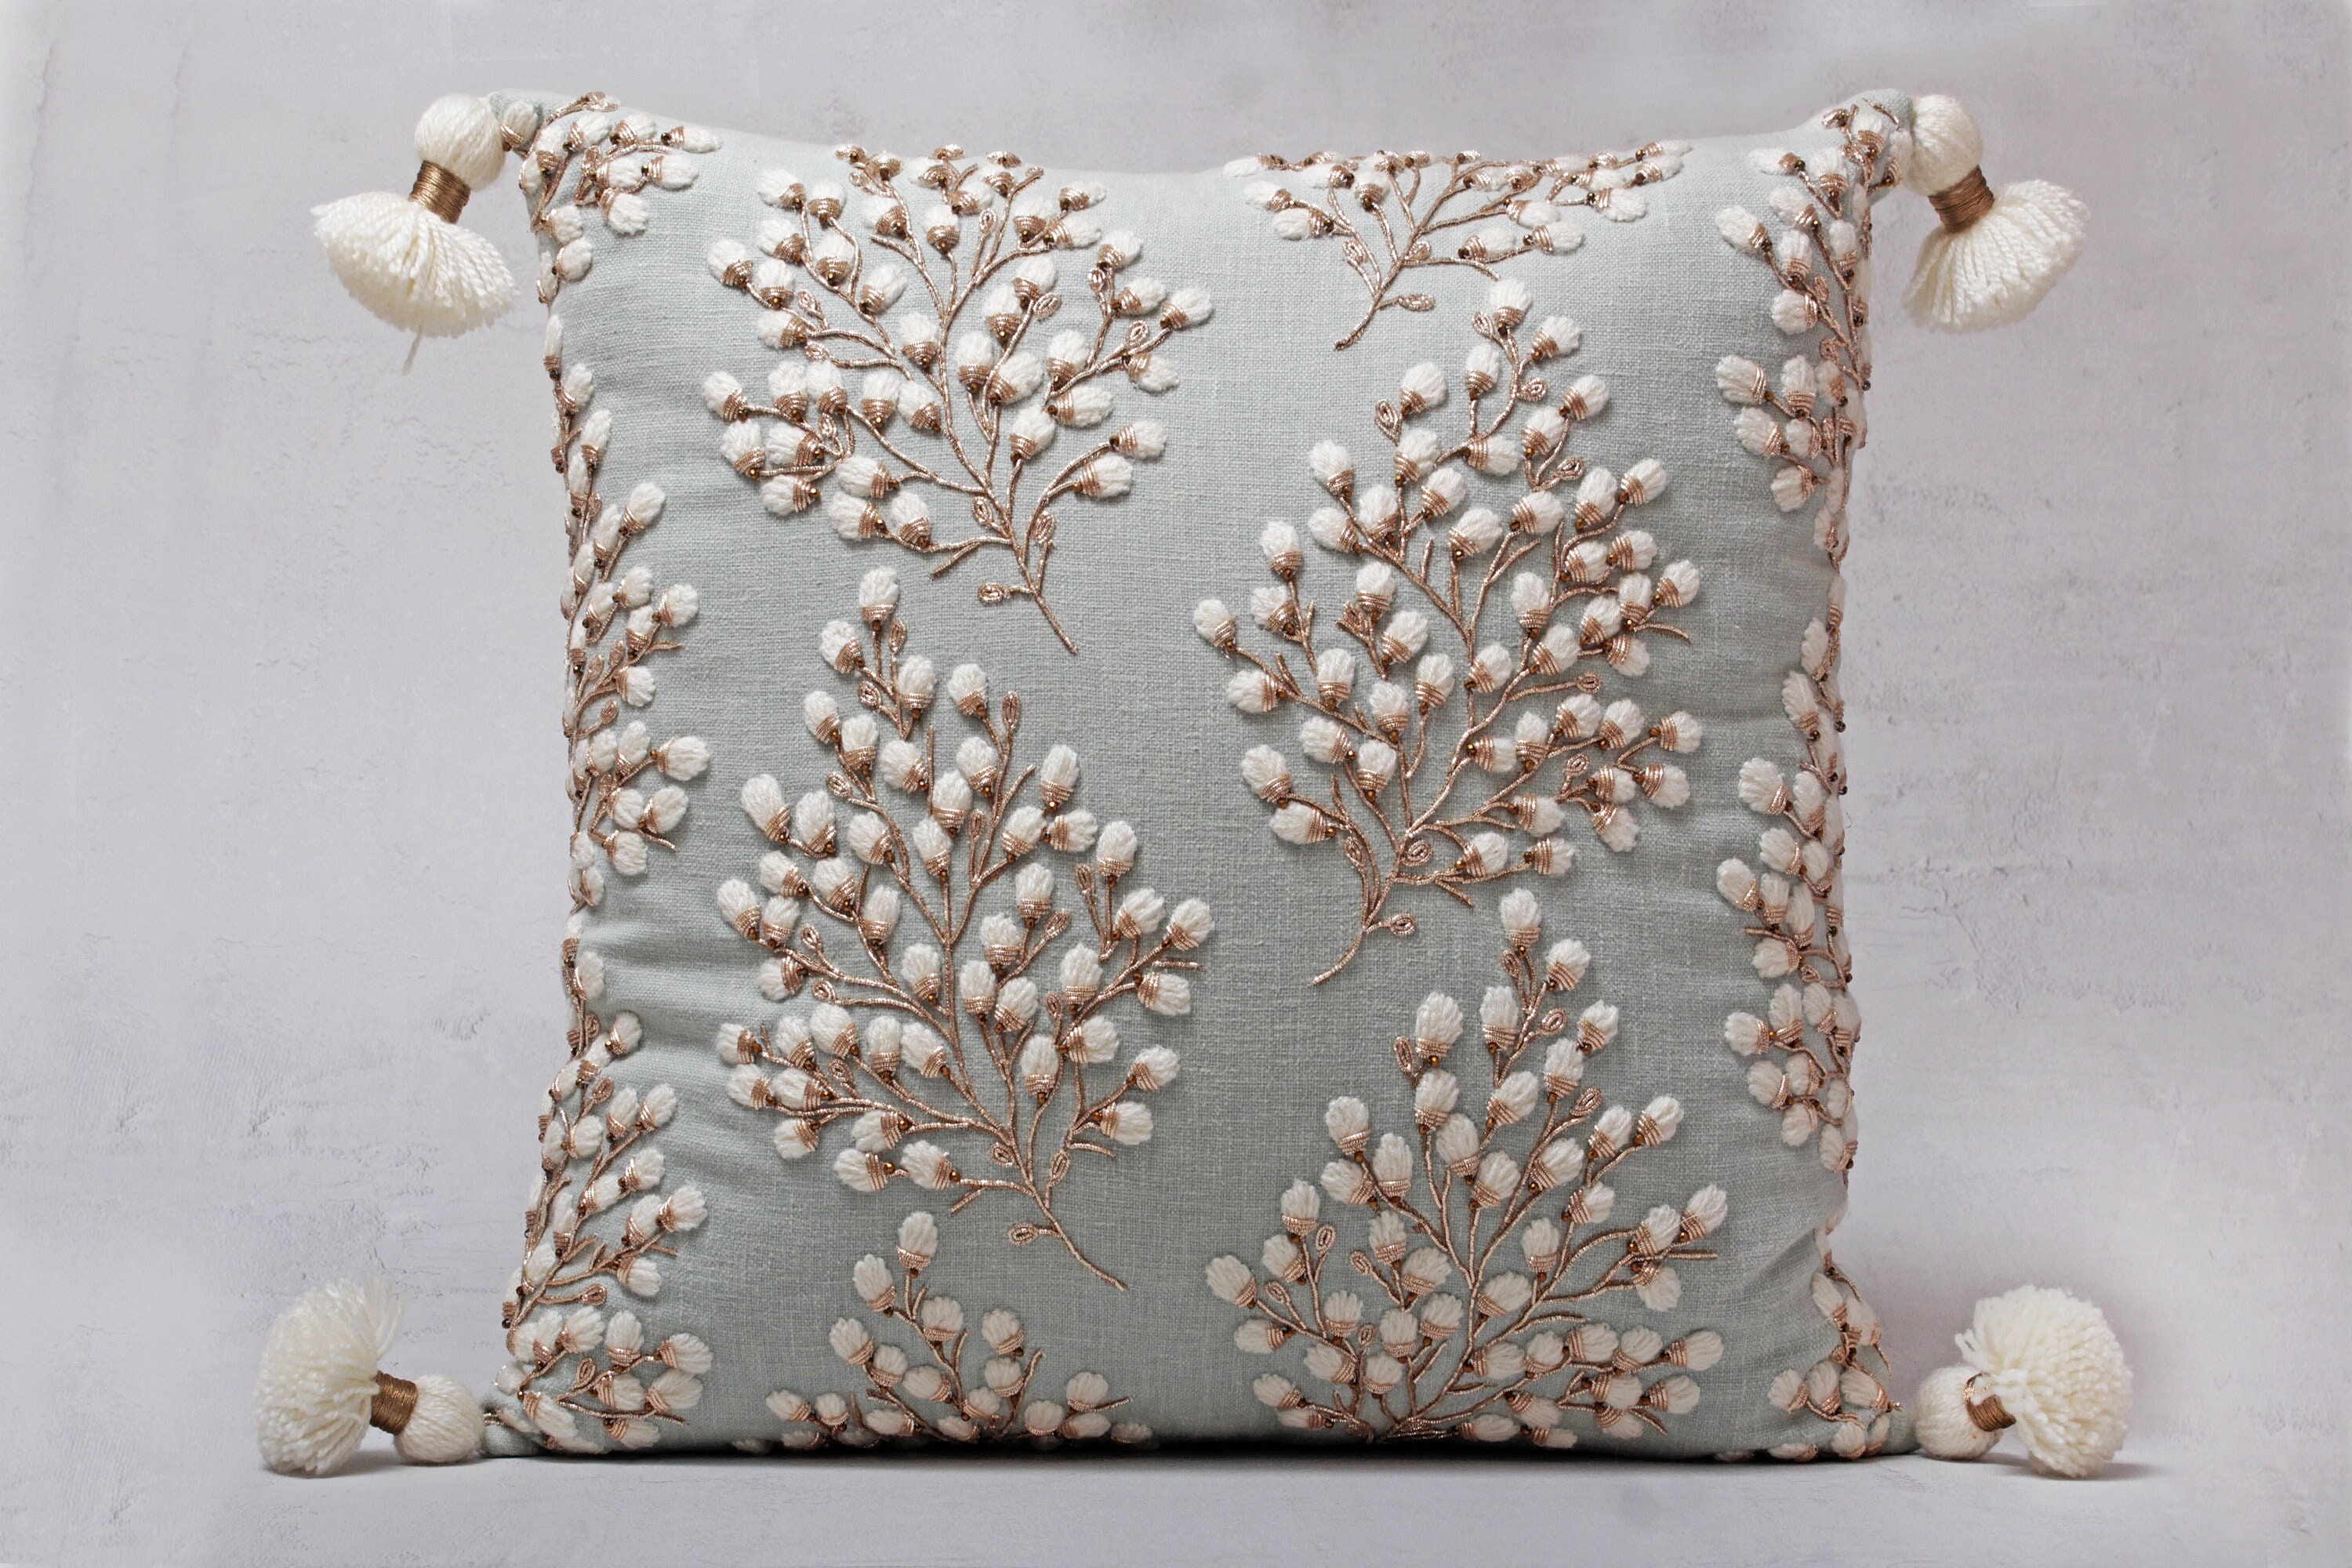 Decorative Pearl Pillow - Stud Pillows